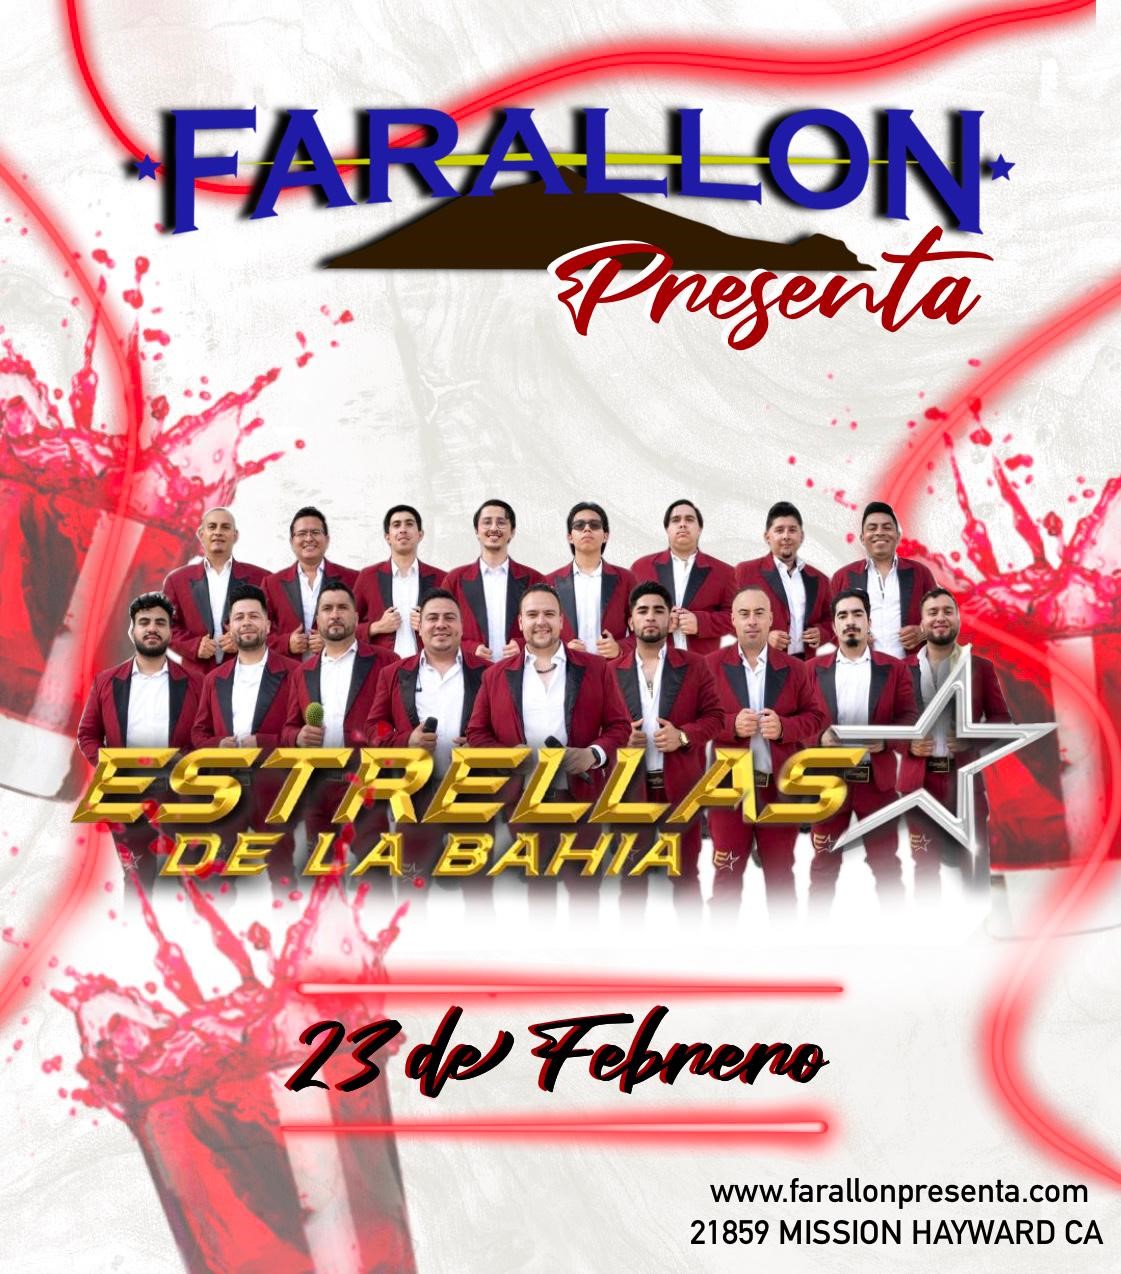 ESTRELLAS DE LA BAHIA  on Feb 23, 21:00@Farallon.. - Buy tickets and Get information on farallonpresenta farallonpresenta